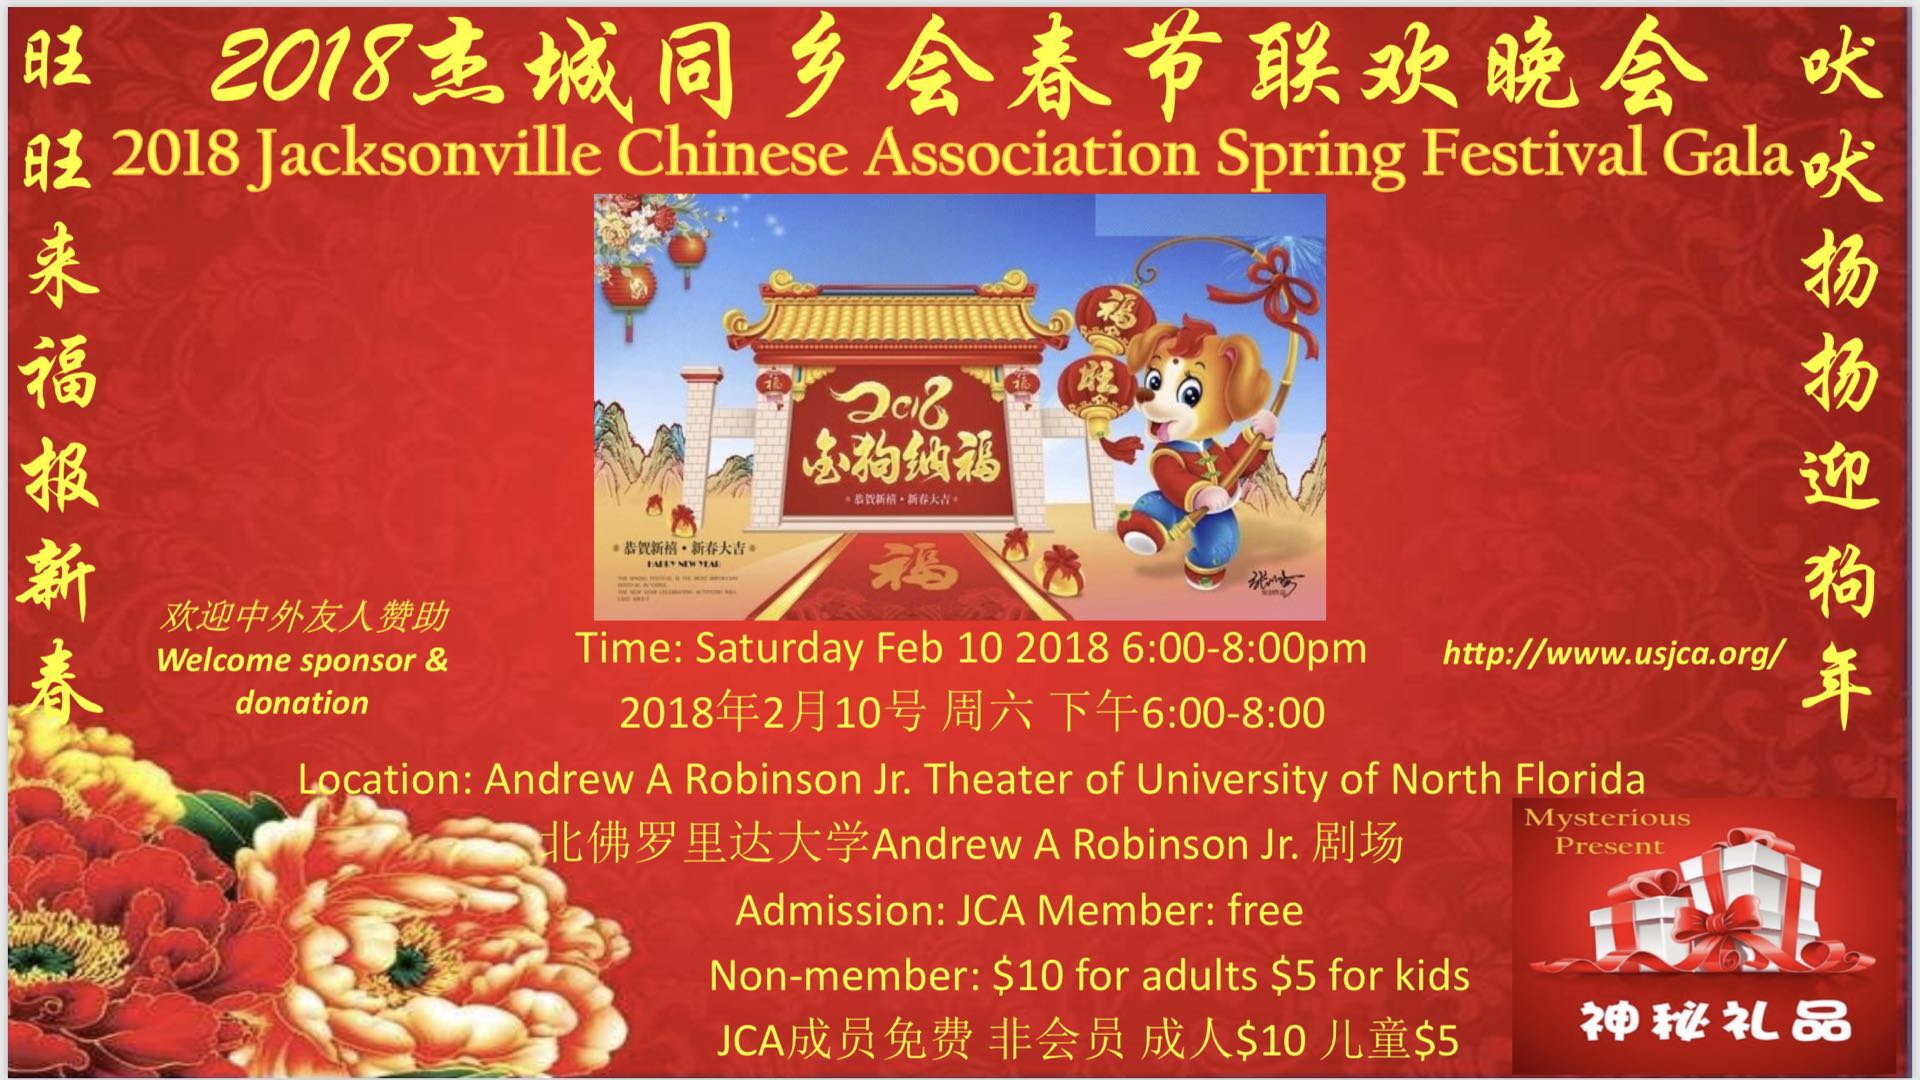 2018 Jacksonville Chinese Association Spring Festival Gala